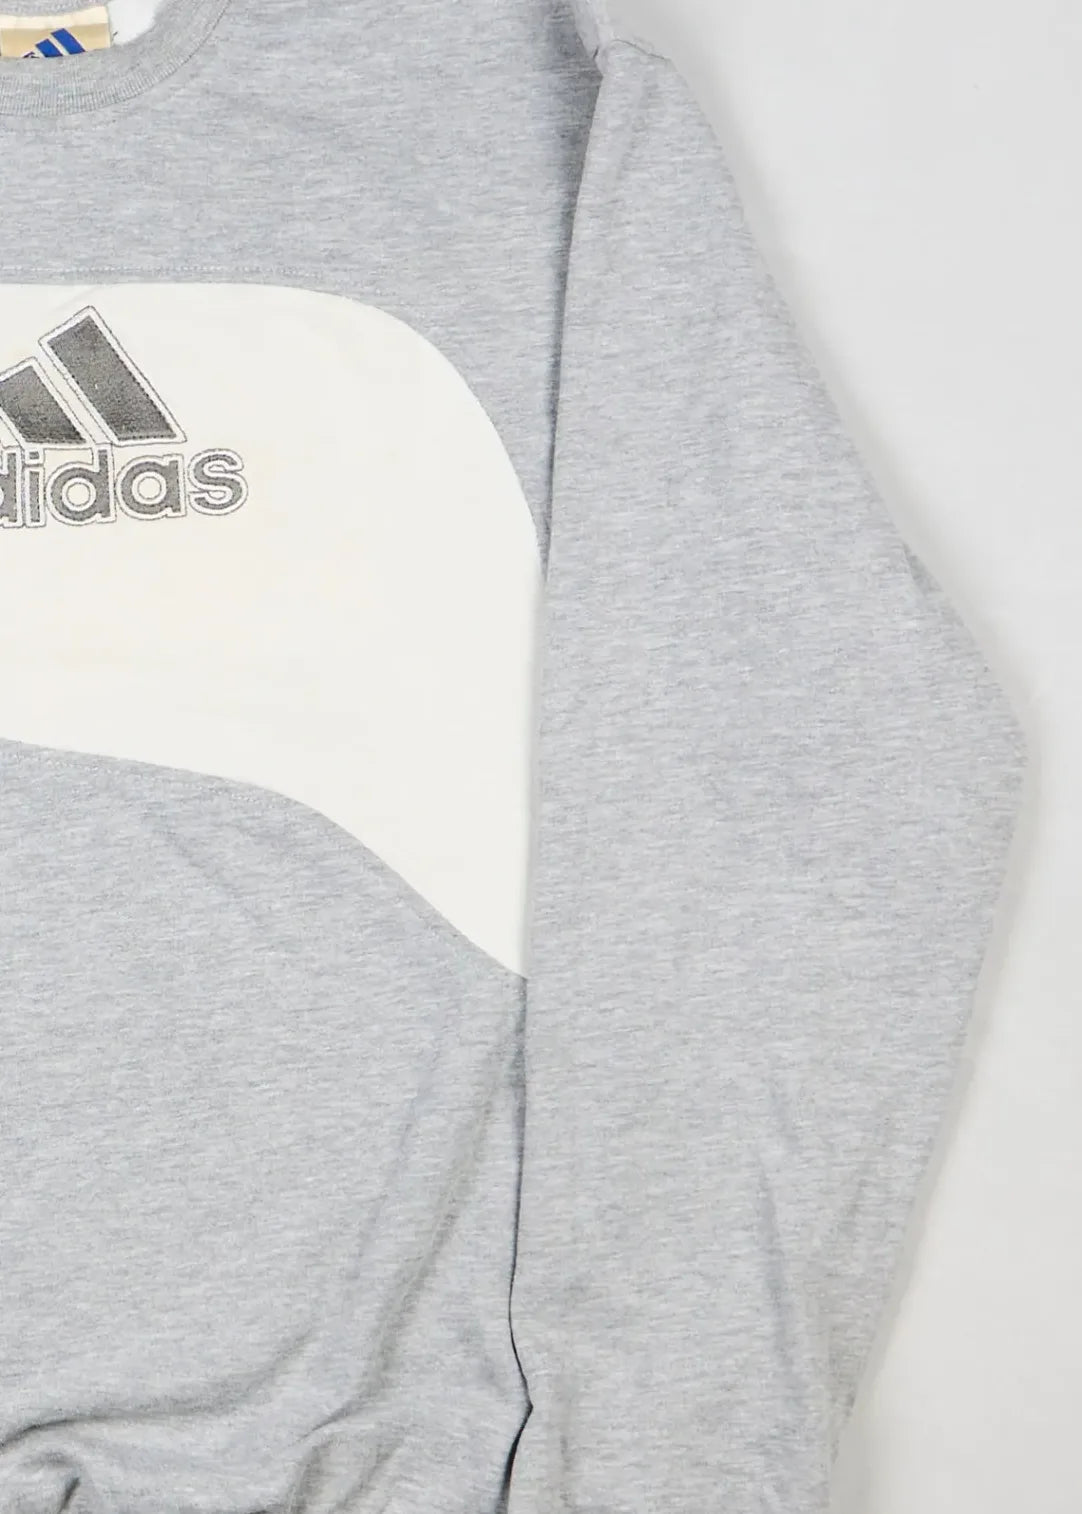 Adidas - Sweatshirt (L) Right